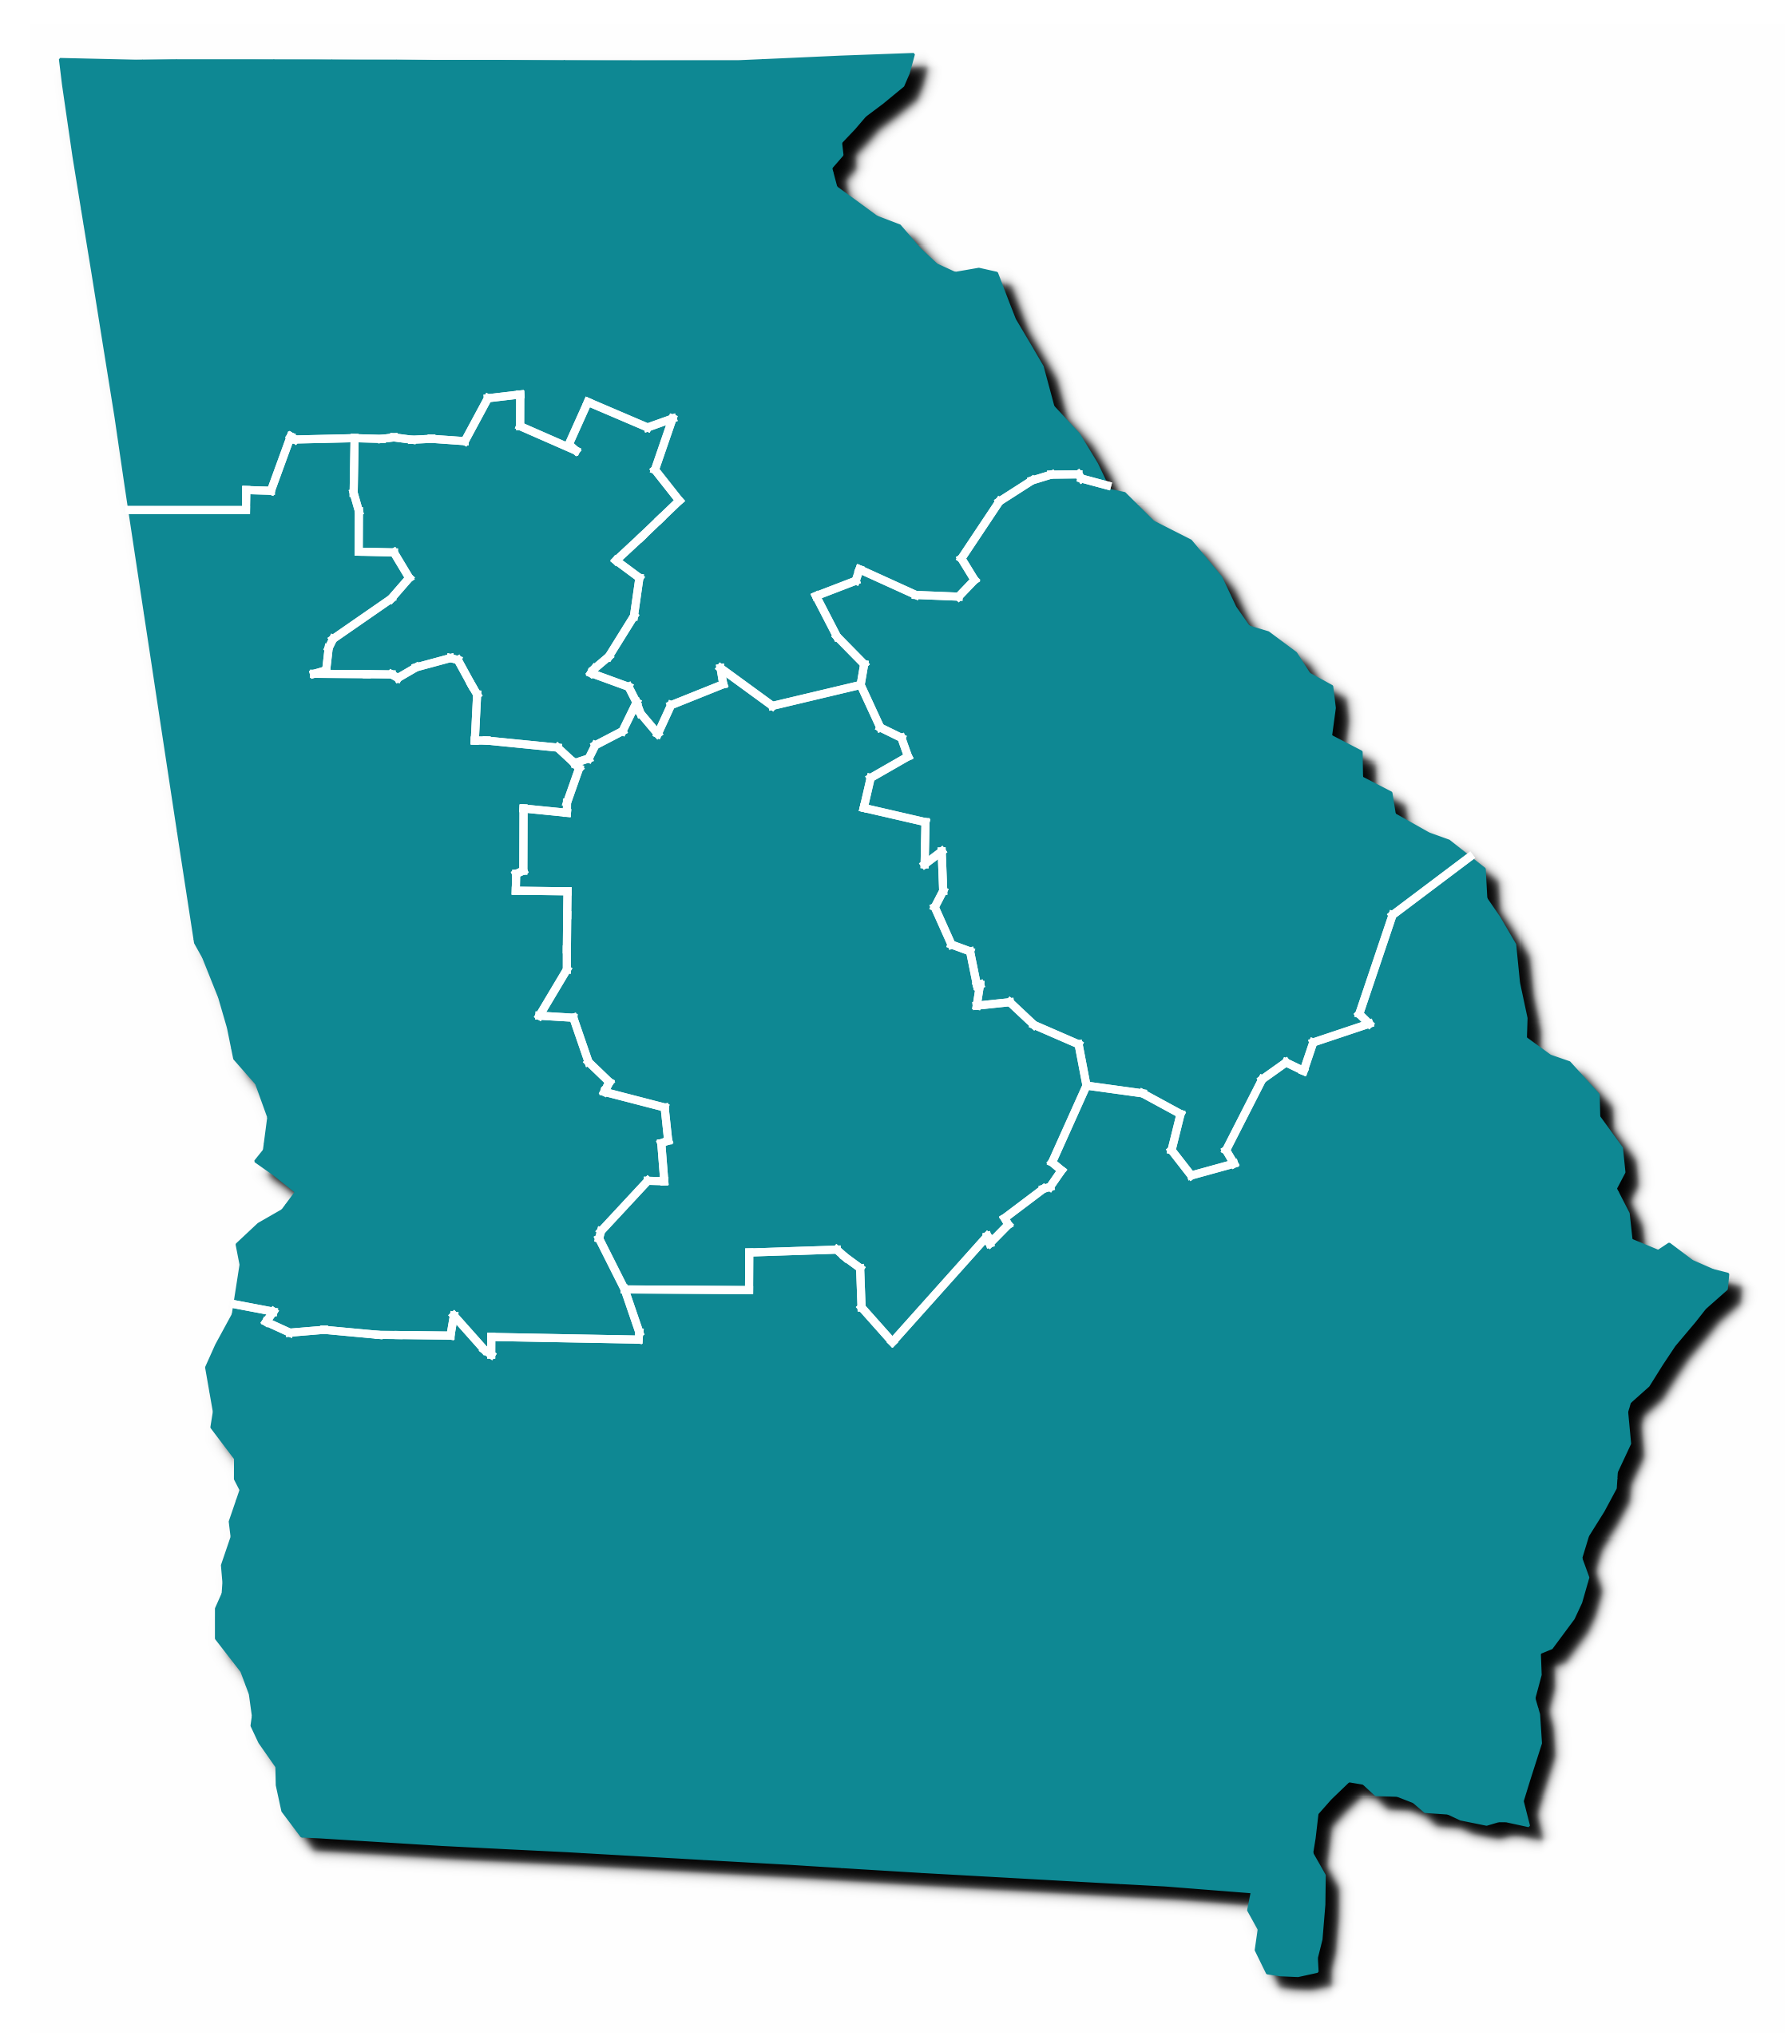 Georgia County Map